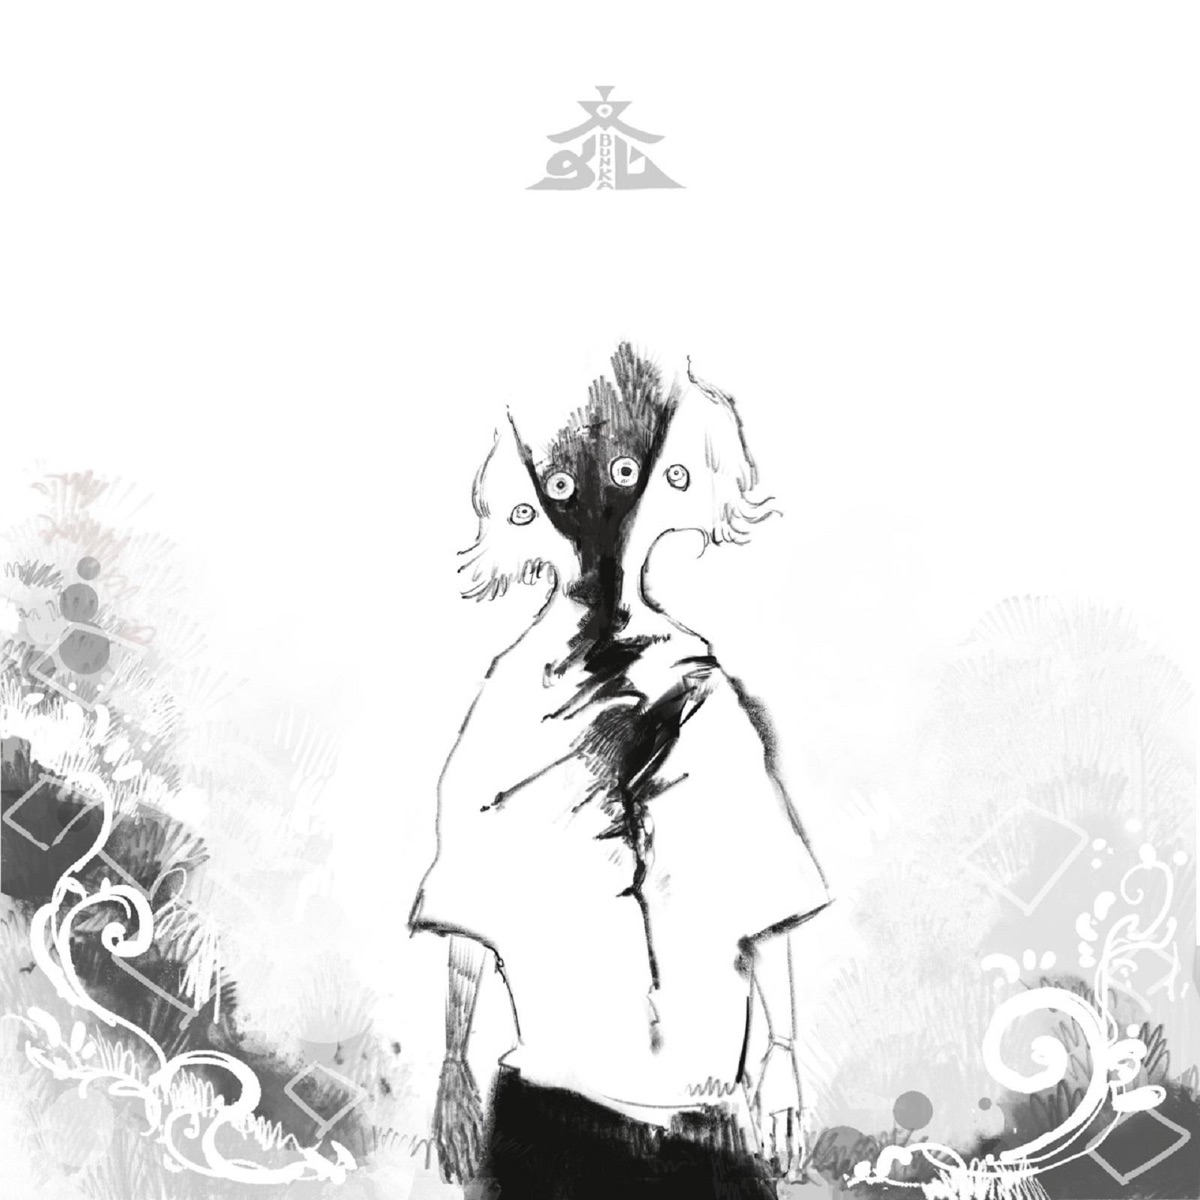 Cover for『Eve - Furi wo Shita.』from the release『Bunka』